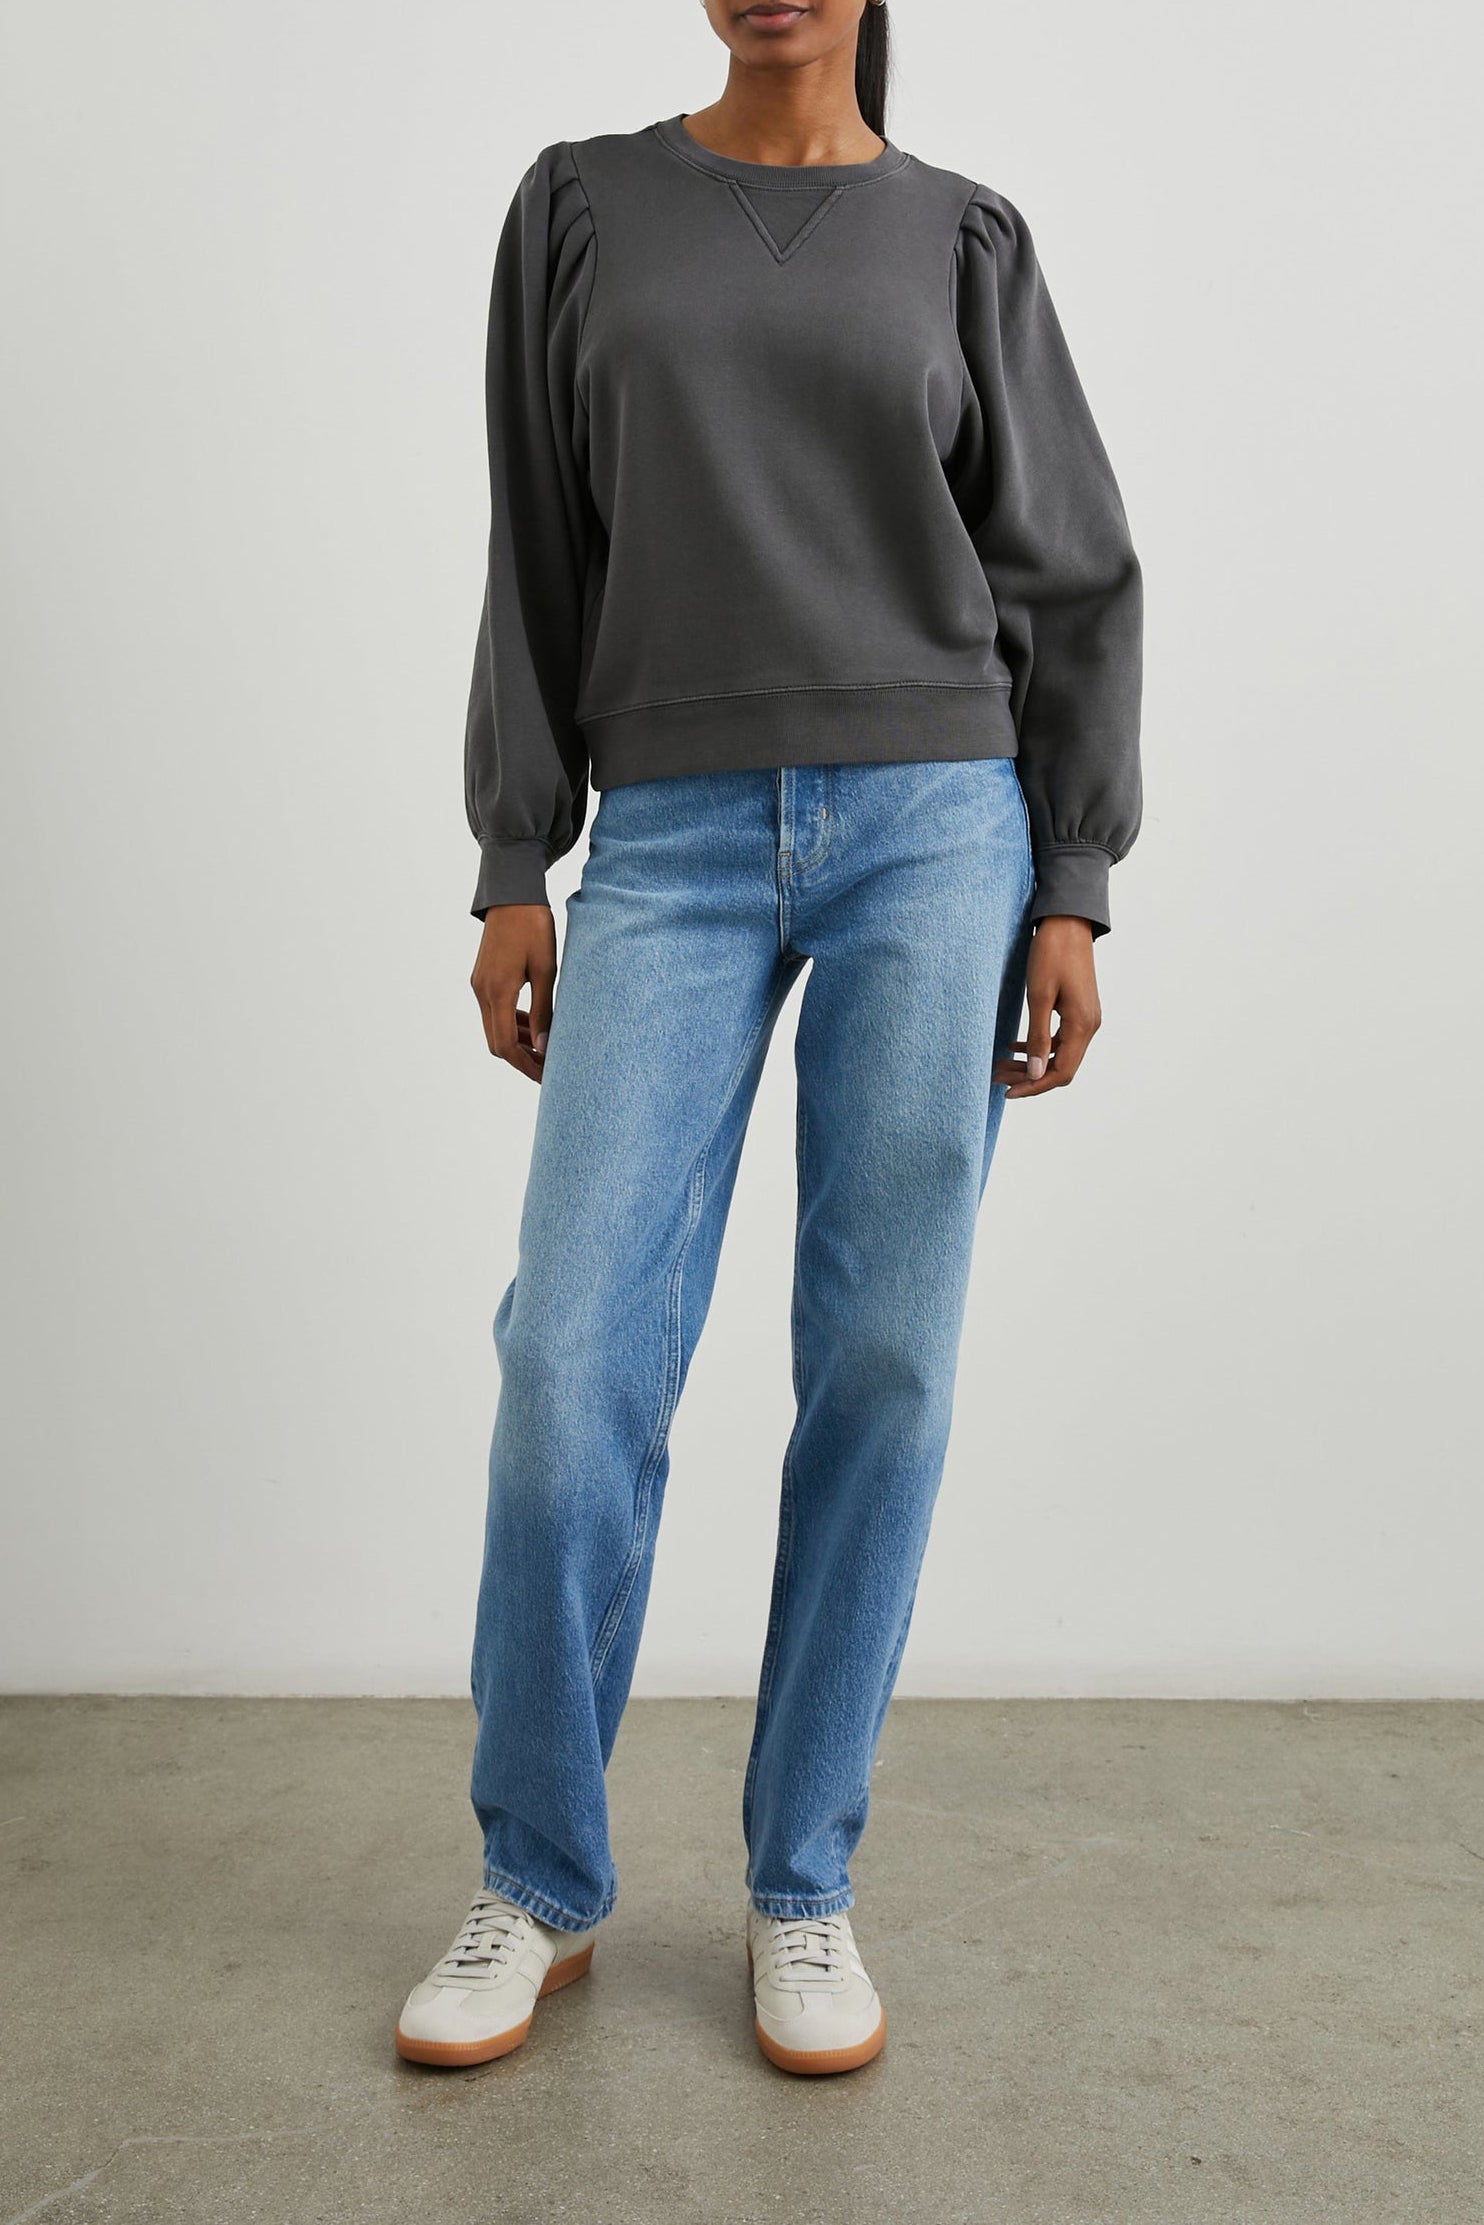 Sweatshirt Tiffany in CharcoalRails - Anita Hass